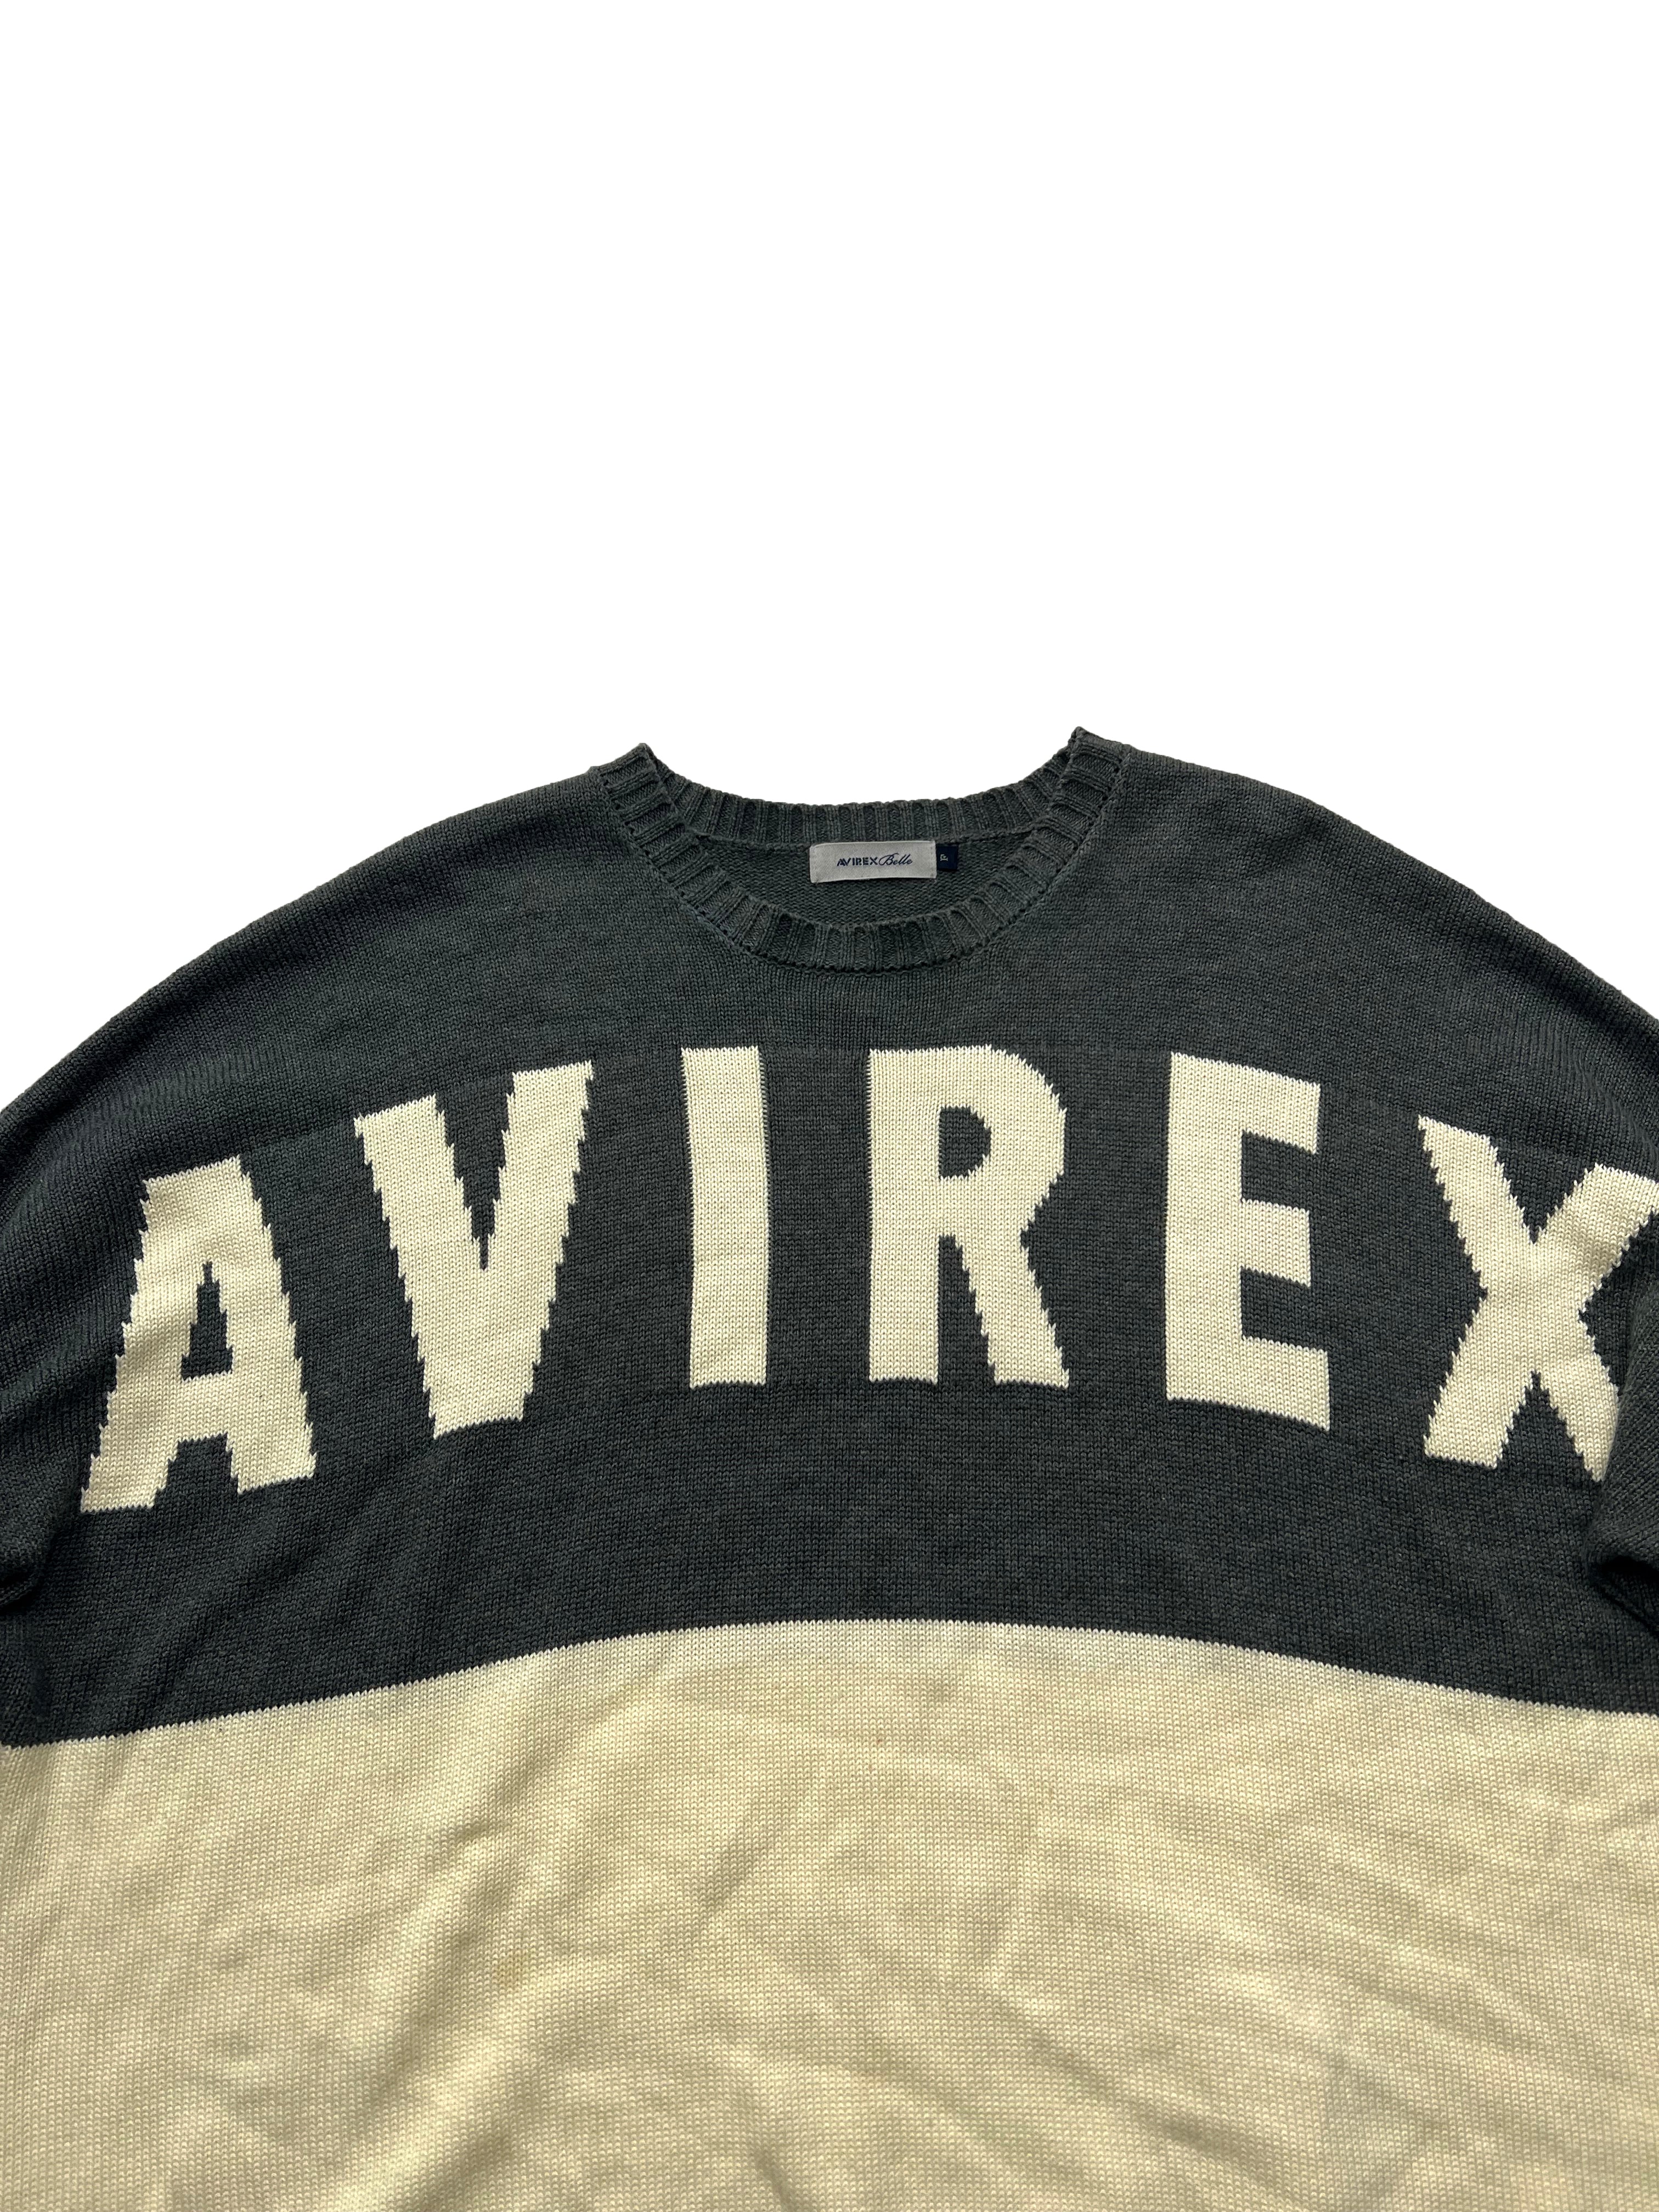 Avirex Grey & Beige Spell Out Knit